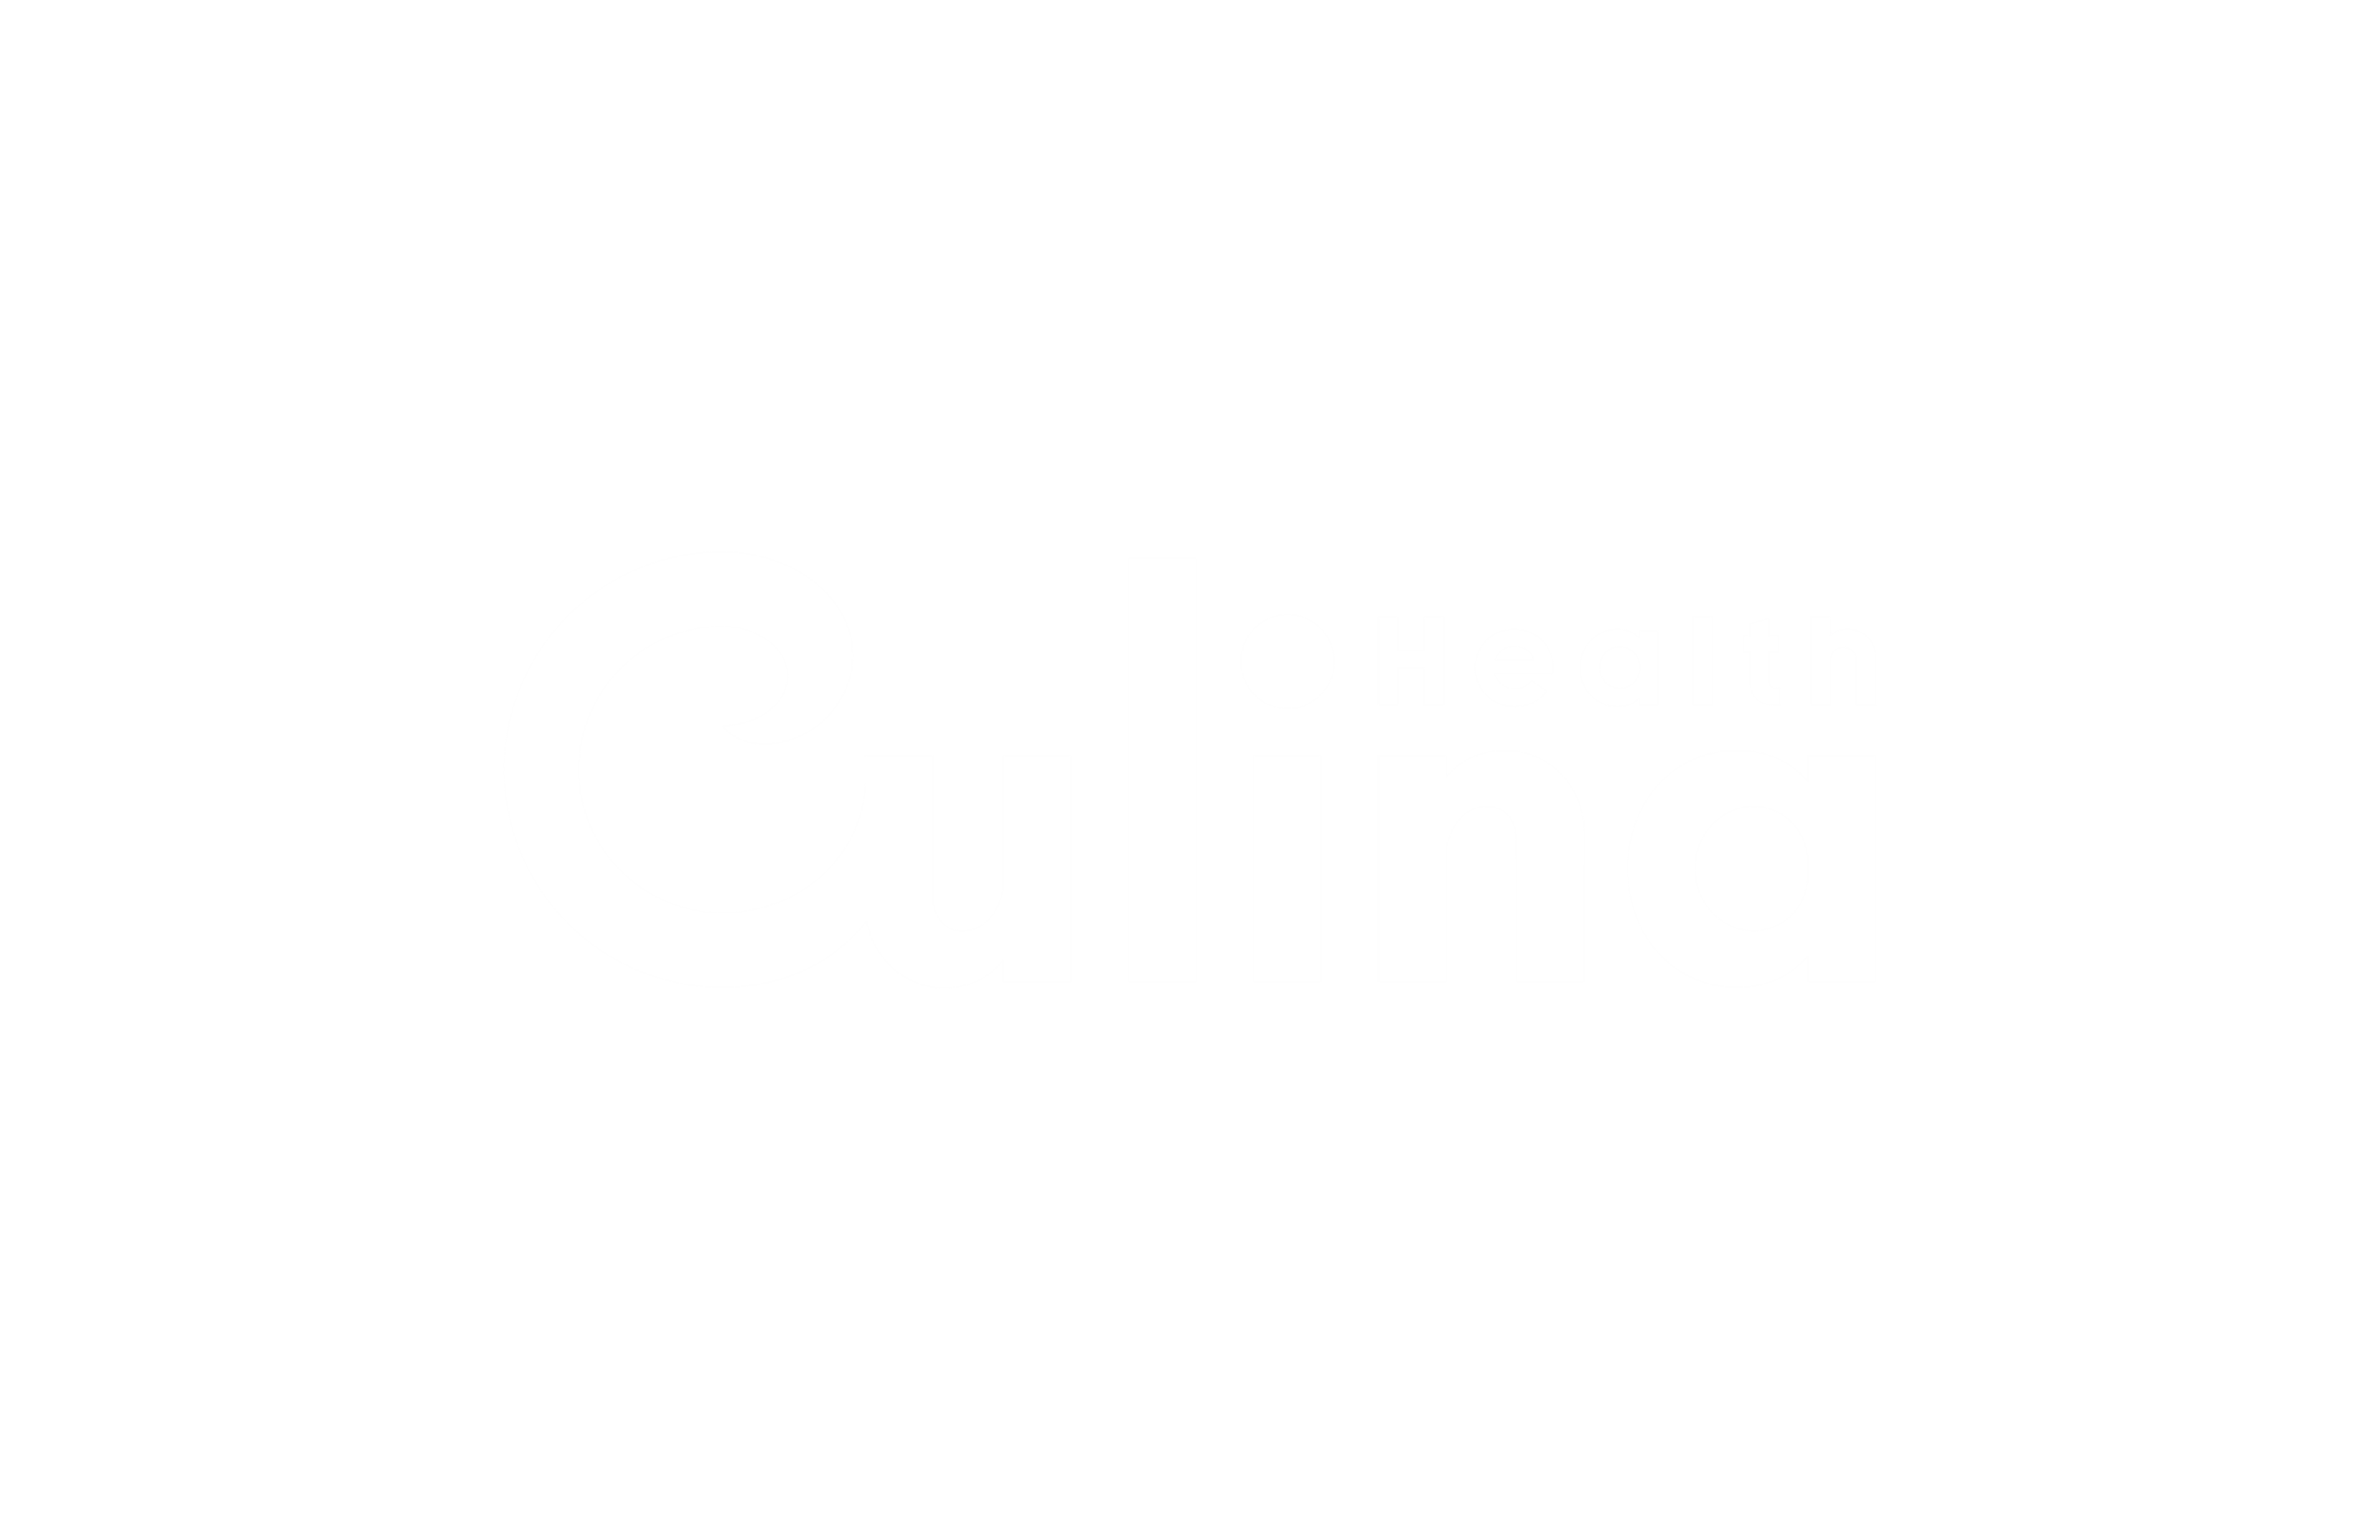 Culina Health